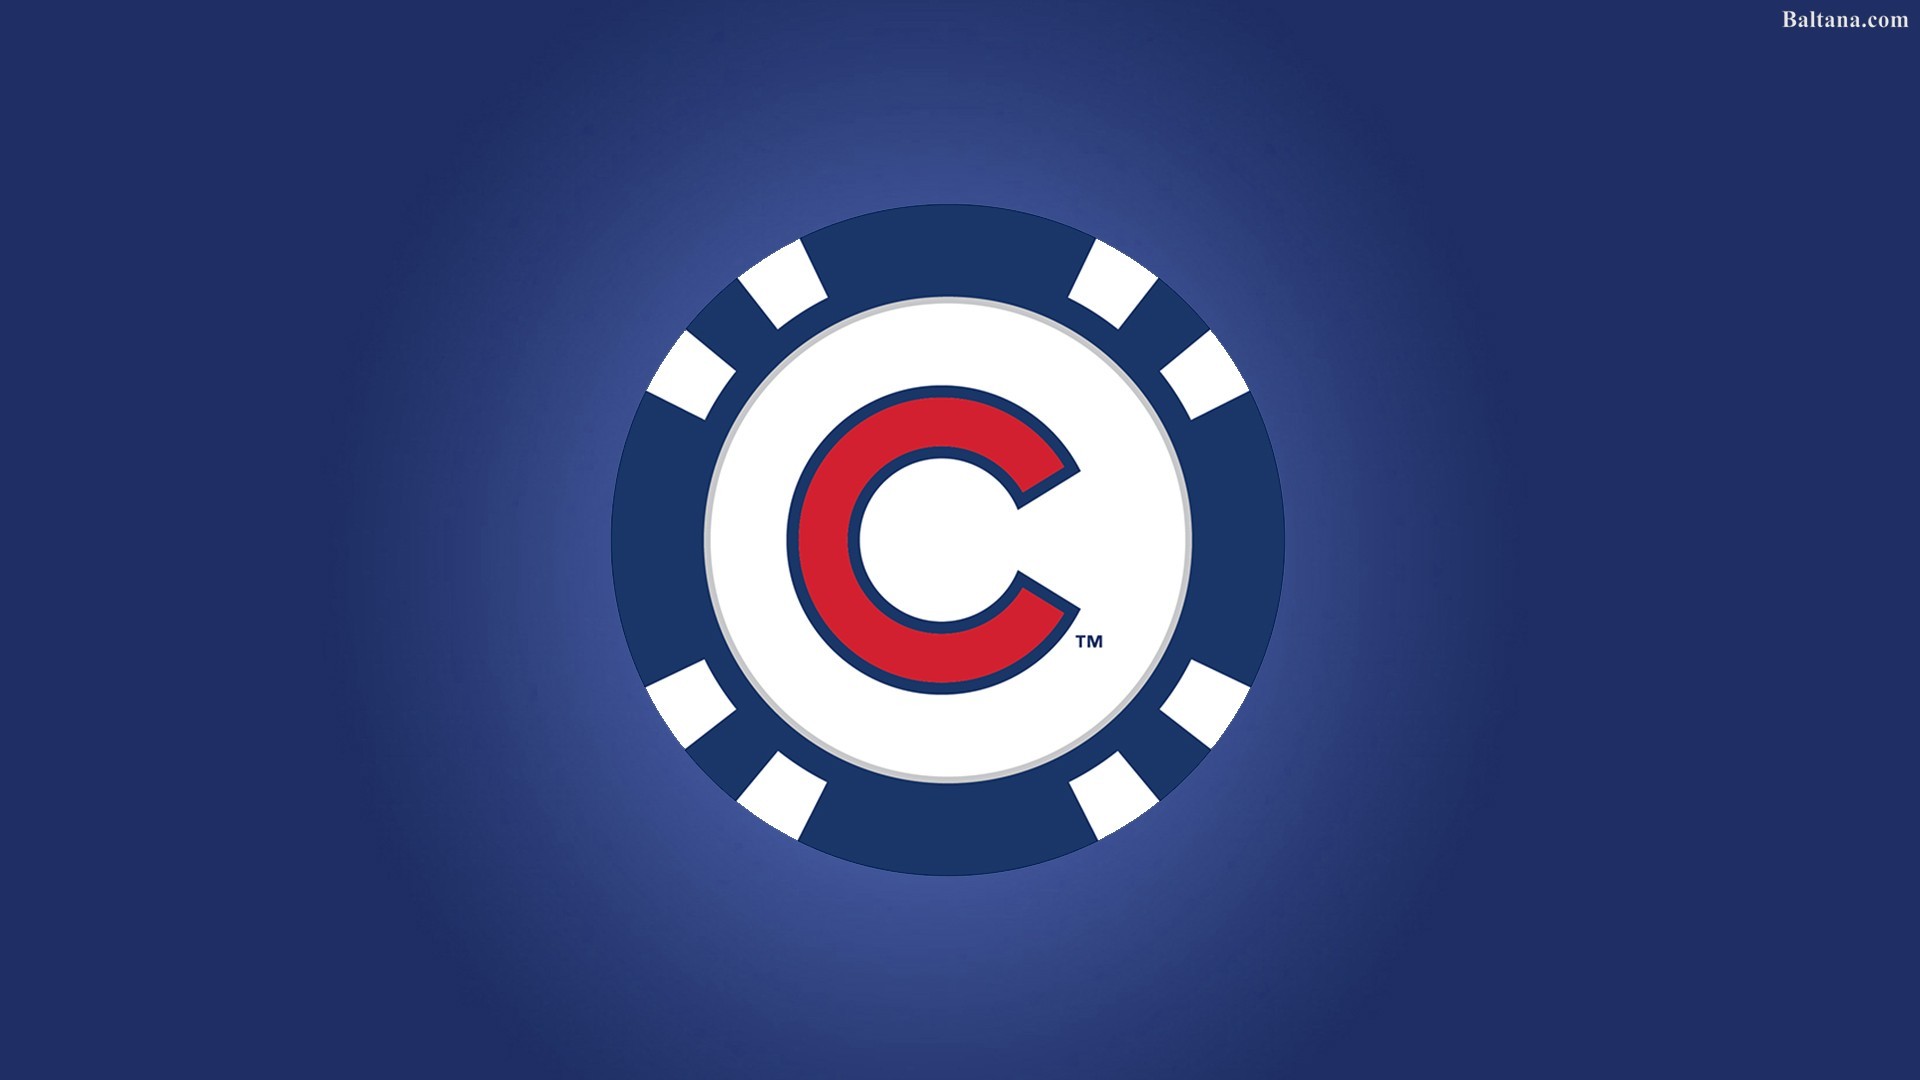 Chicago Cubs Wallpaper 33020 1920x1080